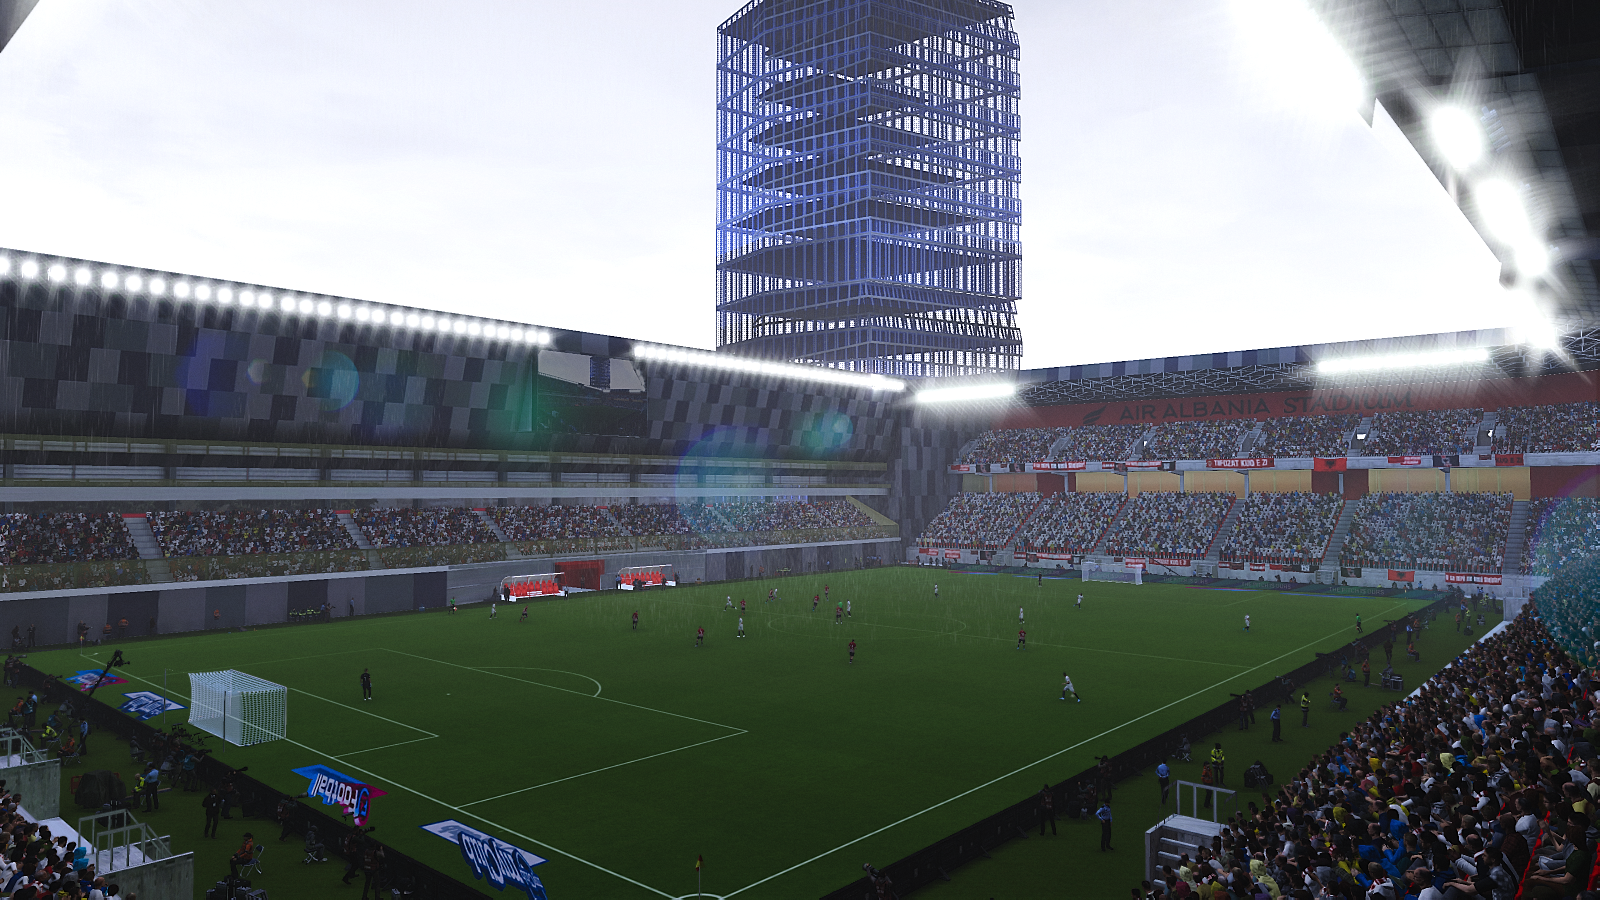 PES 2021 Air Albania Stadium (Arena Kombëtare)